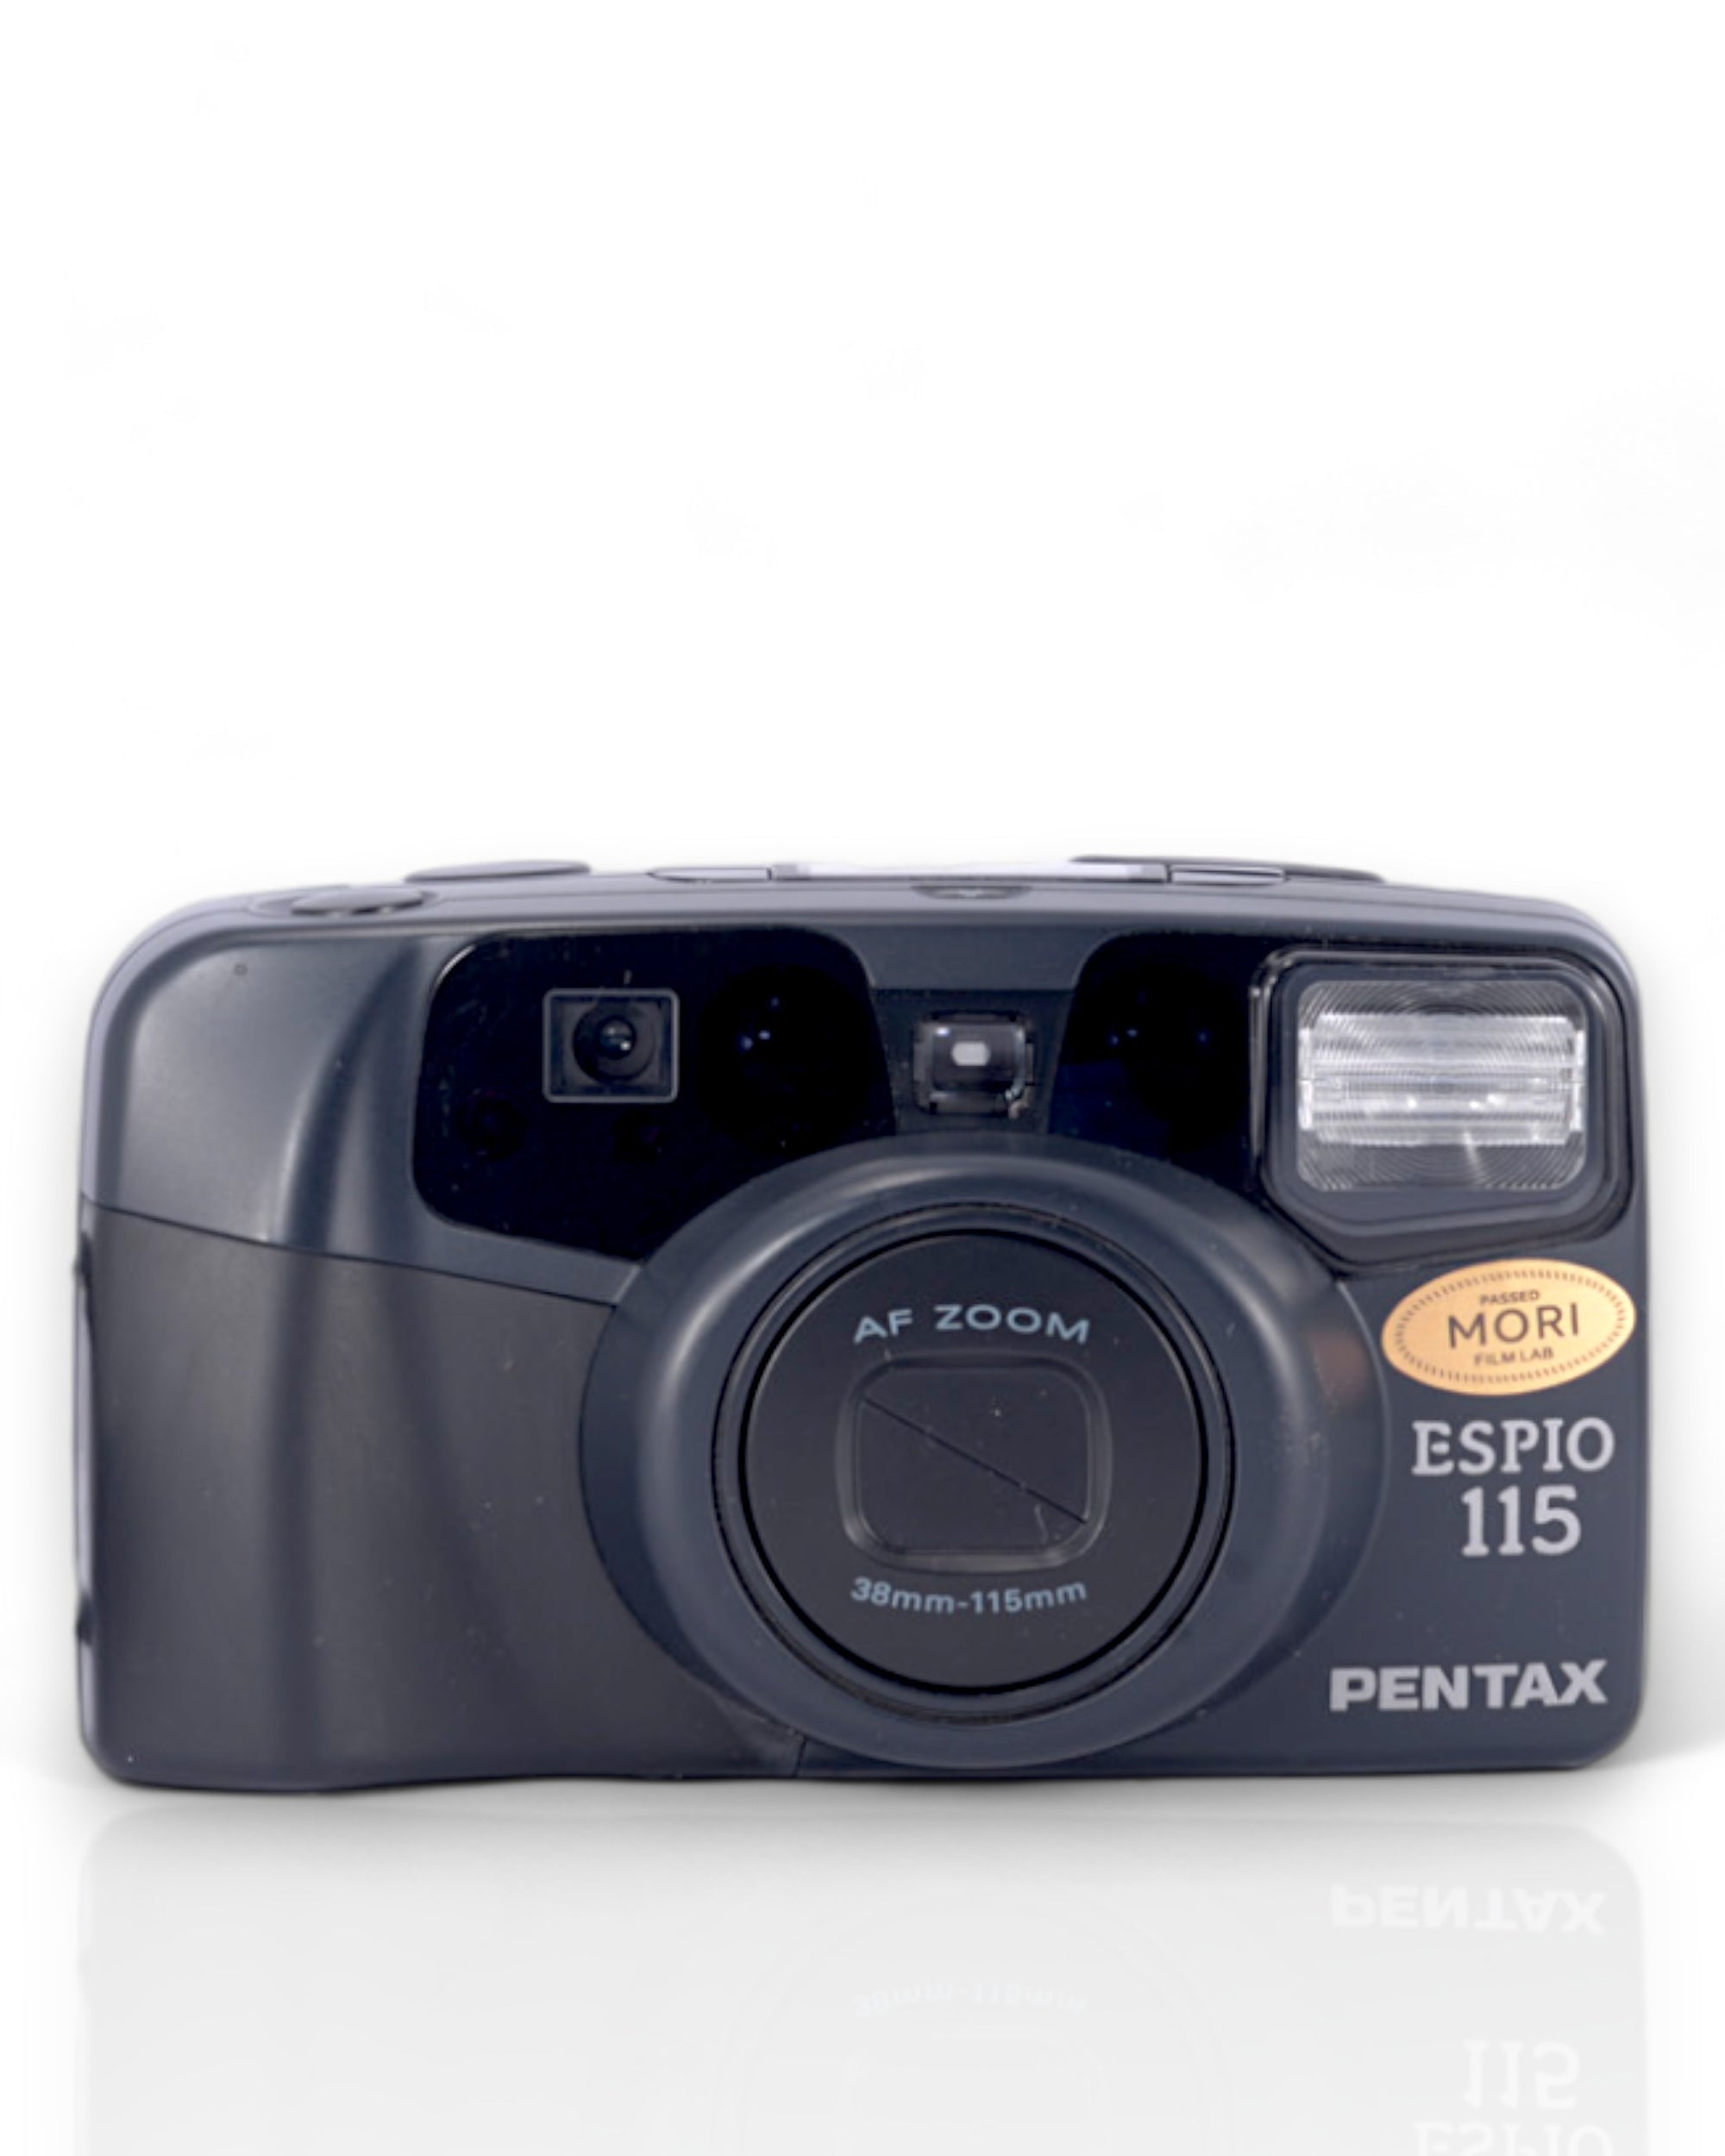 Pentax Espio 115 35mm Point & Shoot film camera with 38-115mm zoom lens